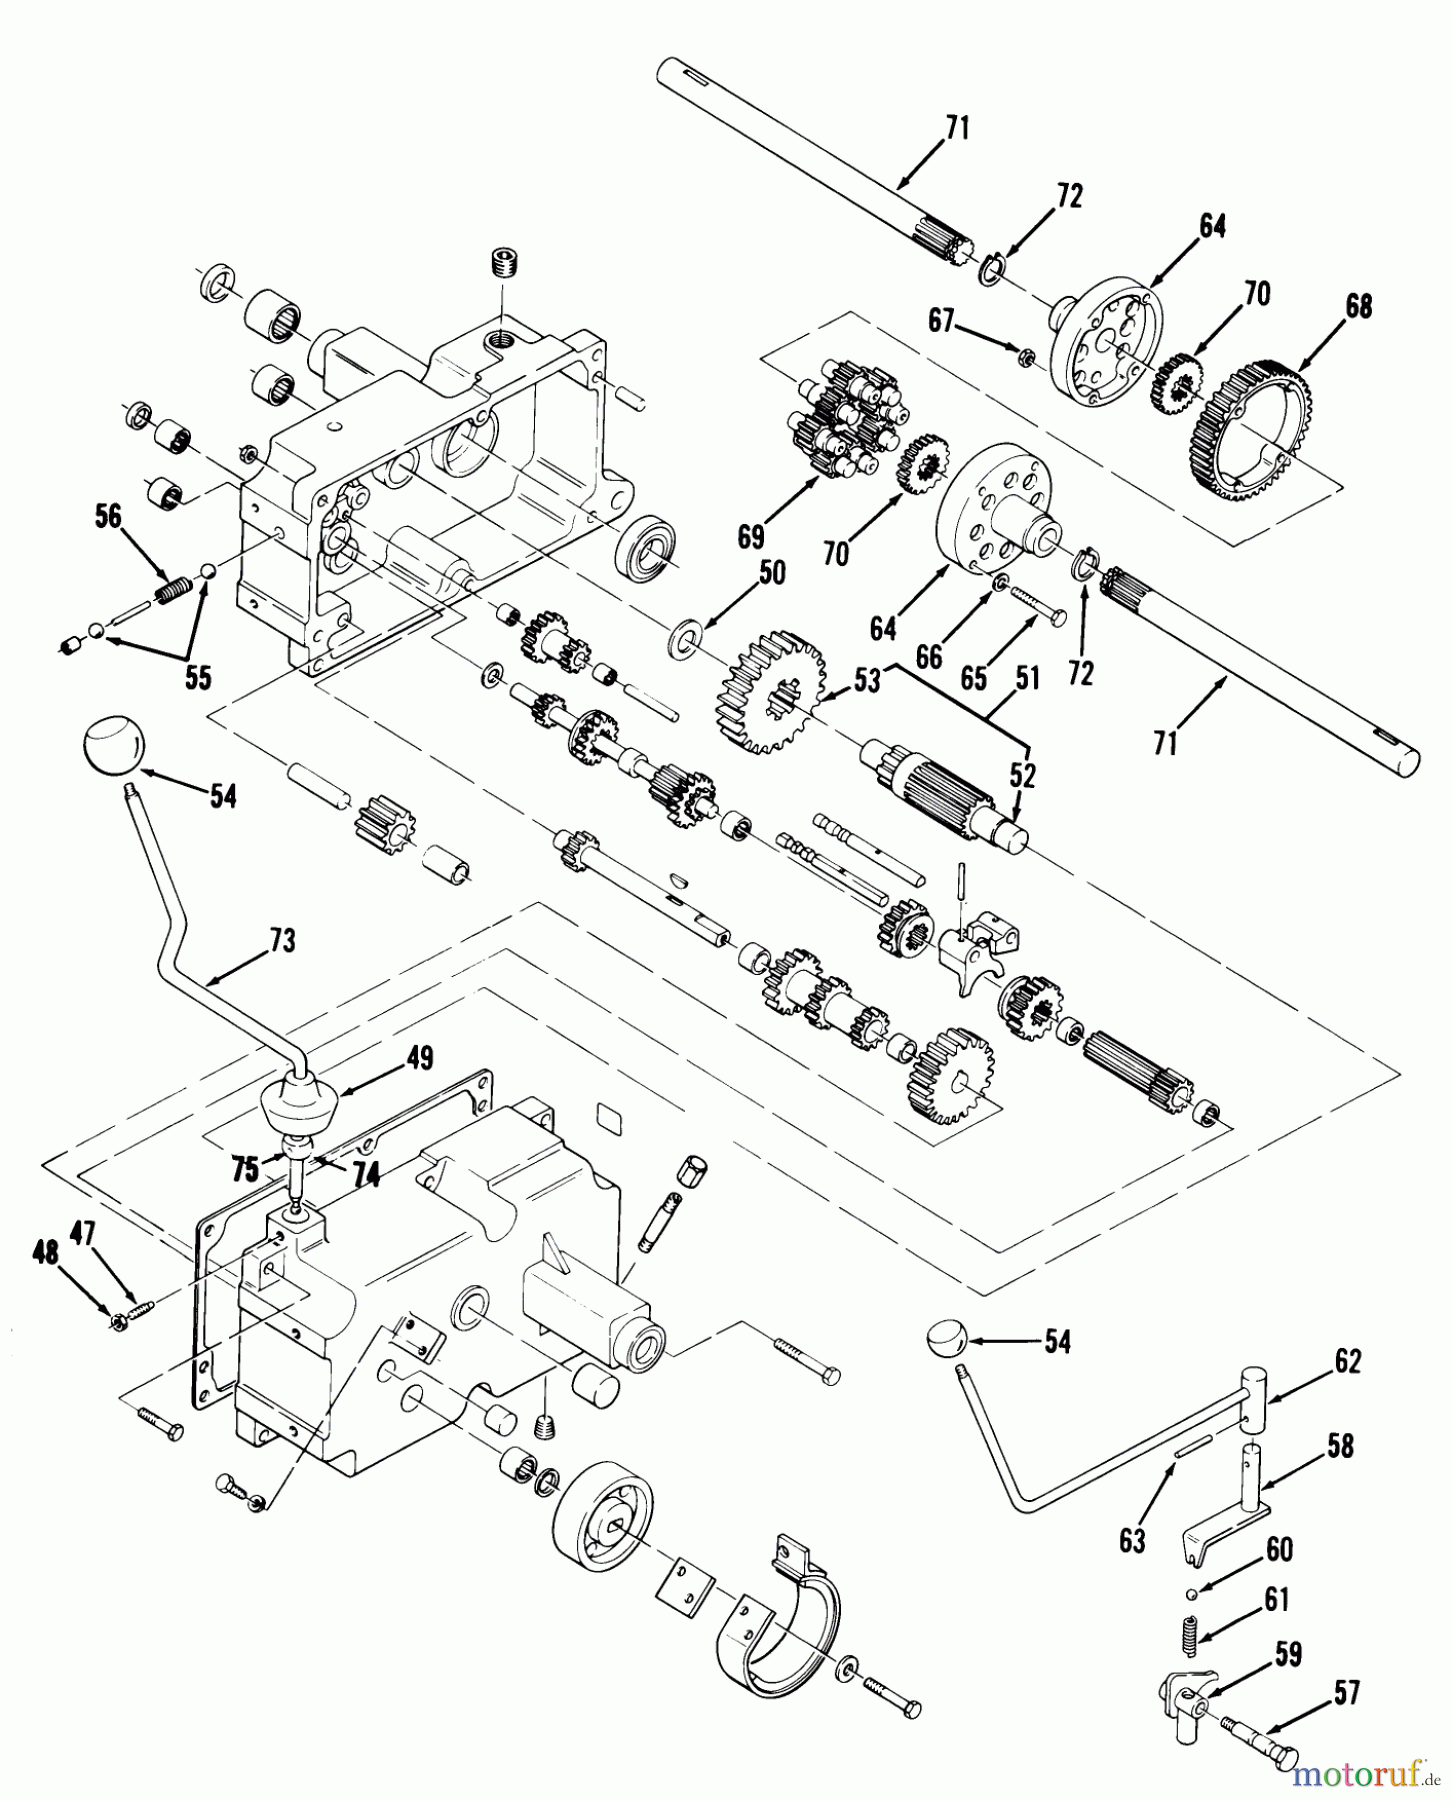  Toro Neu Mowers, Lawn & Garden Tractor Seite 1 01-14E801 (E-141) - Toro E-141 8-Speed Tractor, 1980 MECHANICAL TRANSMISSION-8 SPEED #2